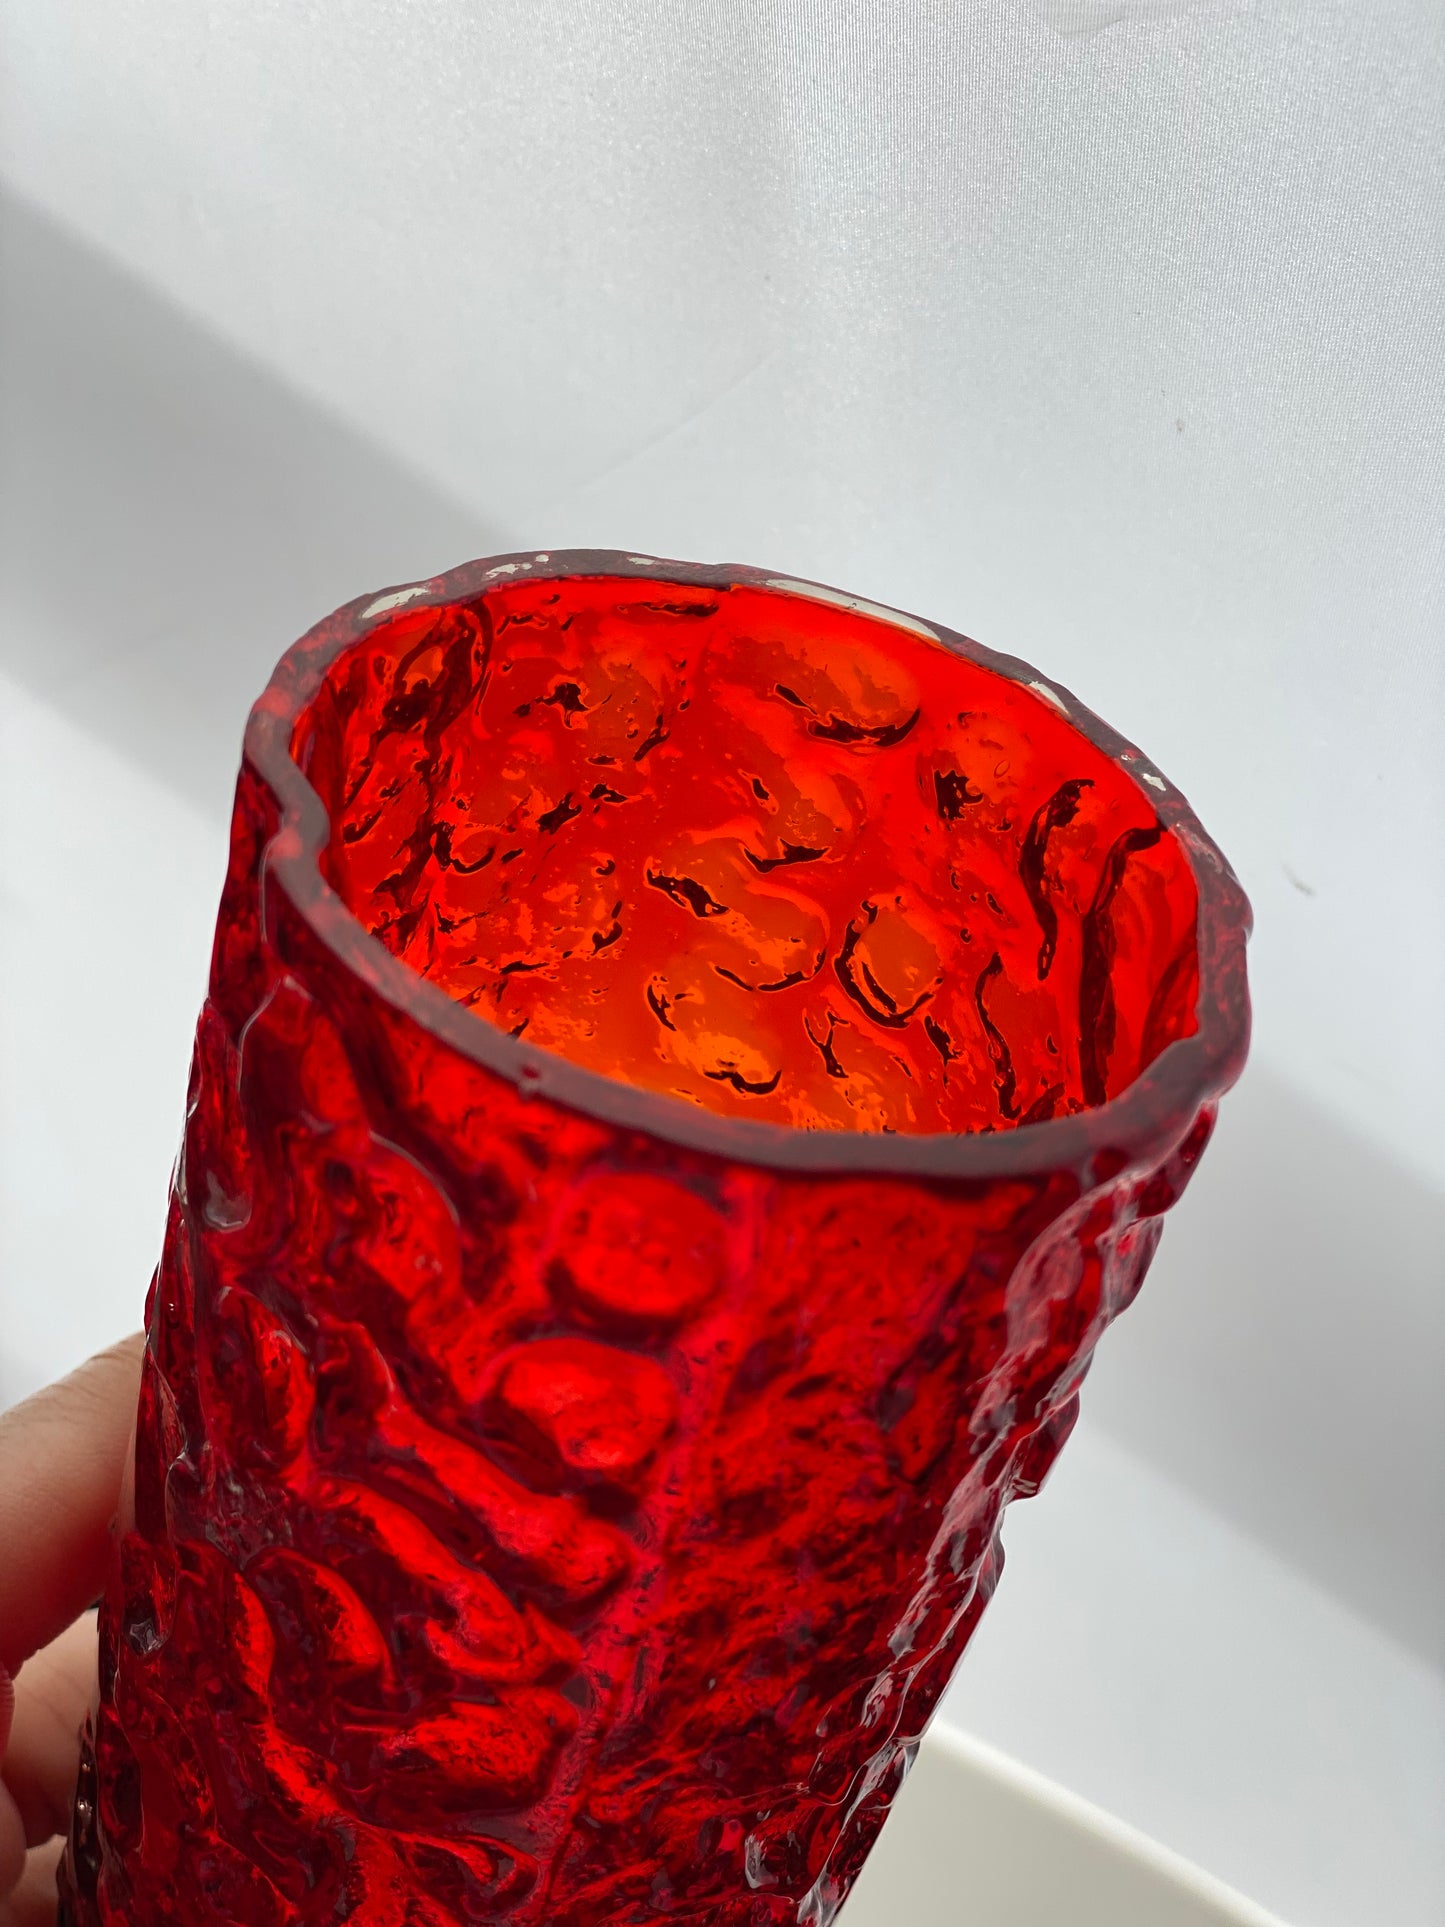 Vibrant Red Japanese Textured Cased Vase from Tajima Glass